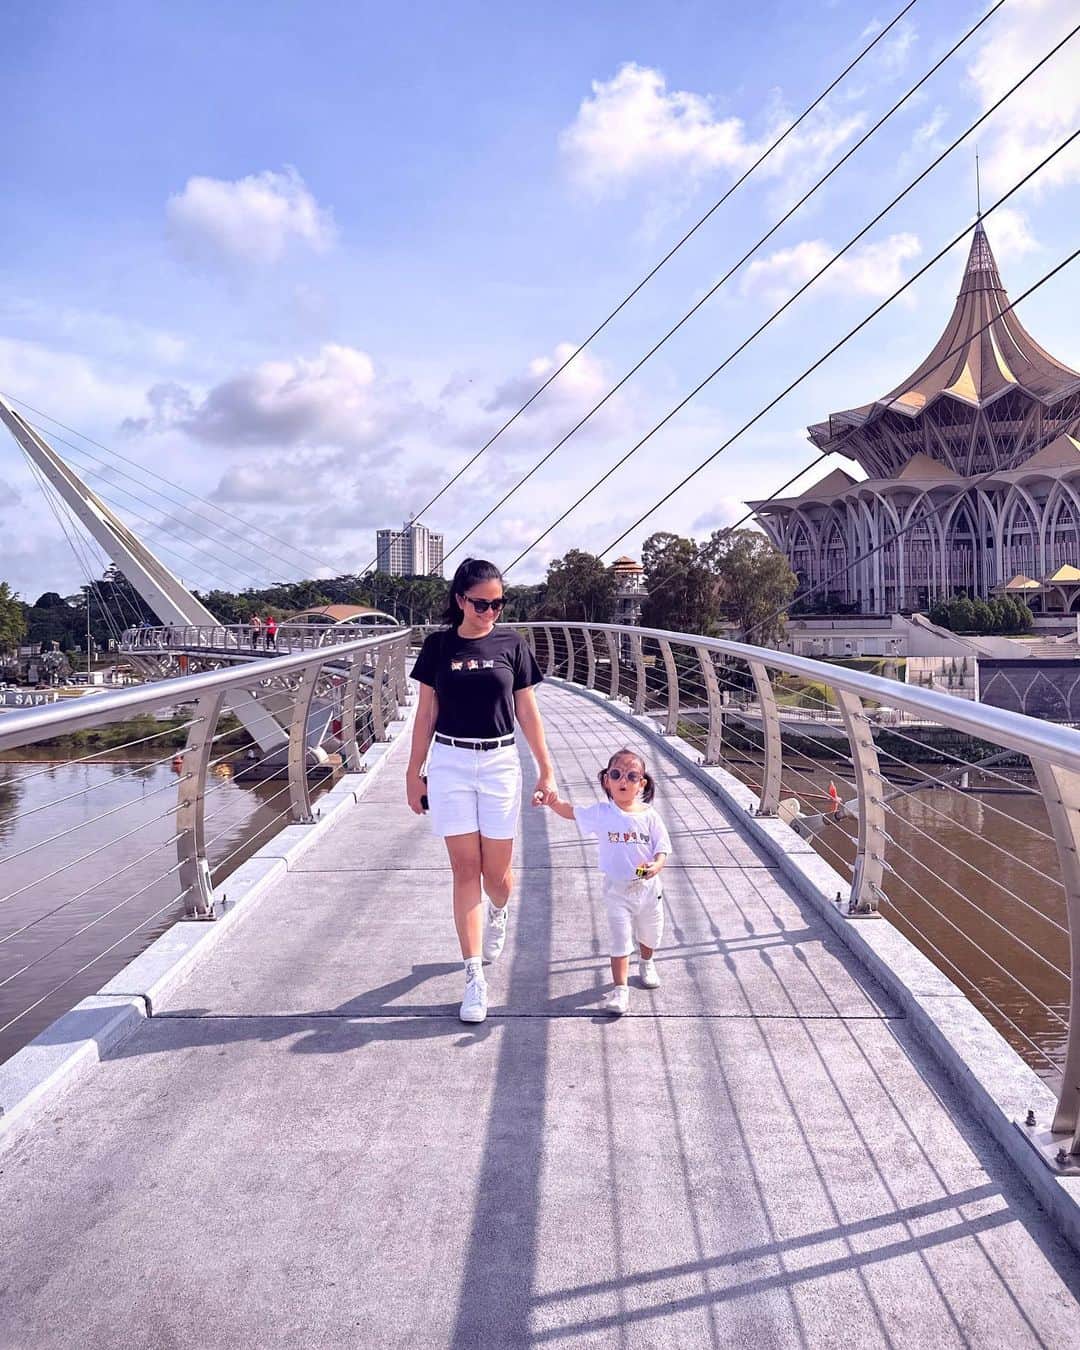 Bridges in Malaysia - Darul Hana Bridge